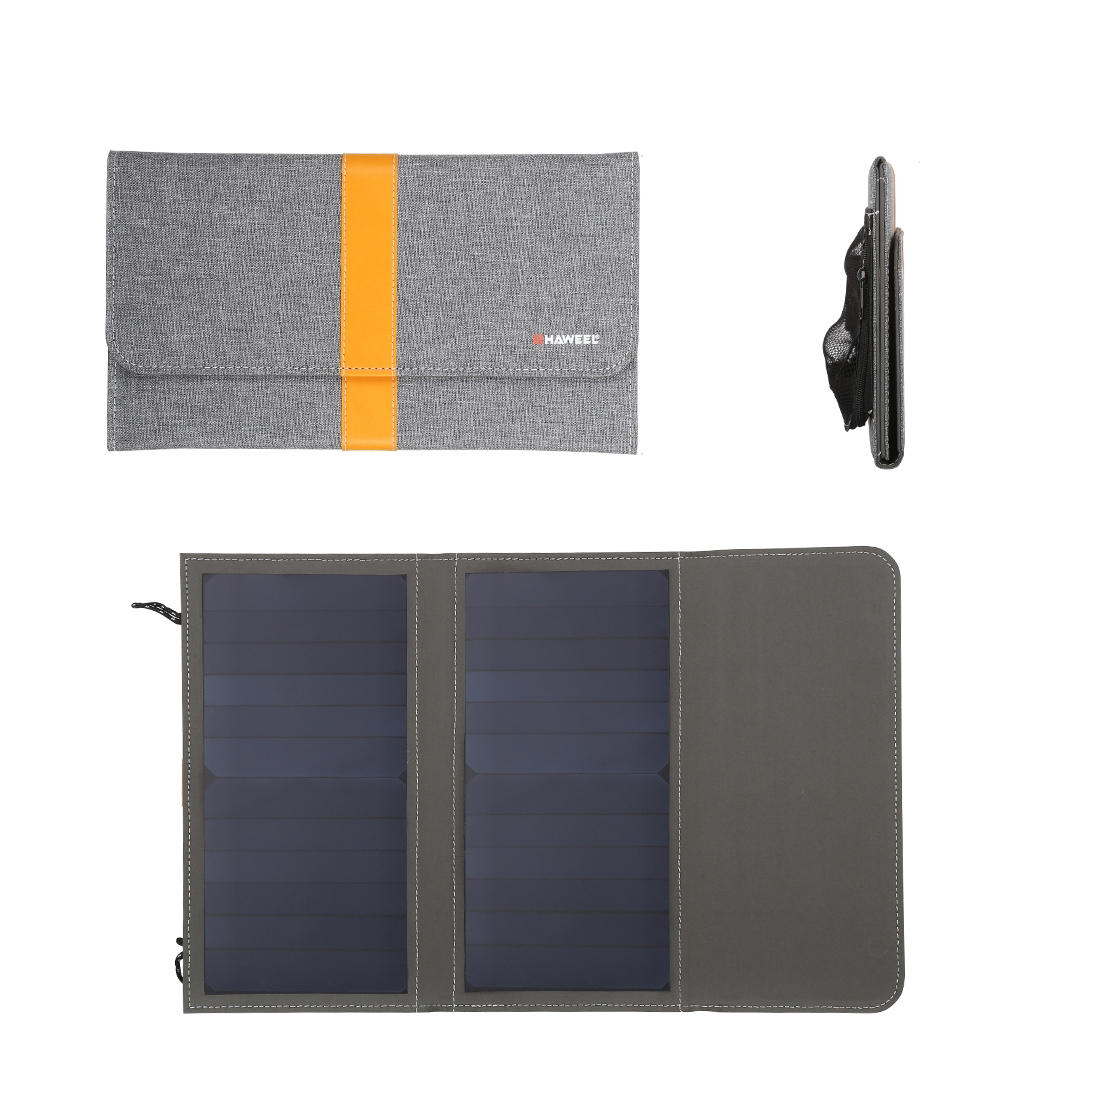 HAWEEL 5V 14W Waterproof Solar Charge Bag Folding Panel DIY Power Bank with Dual USB